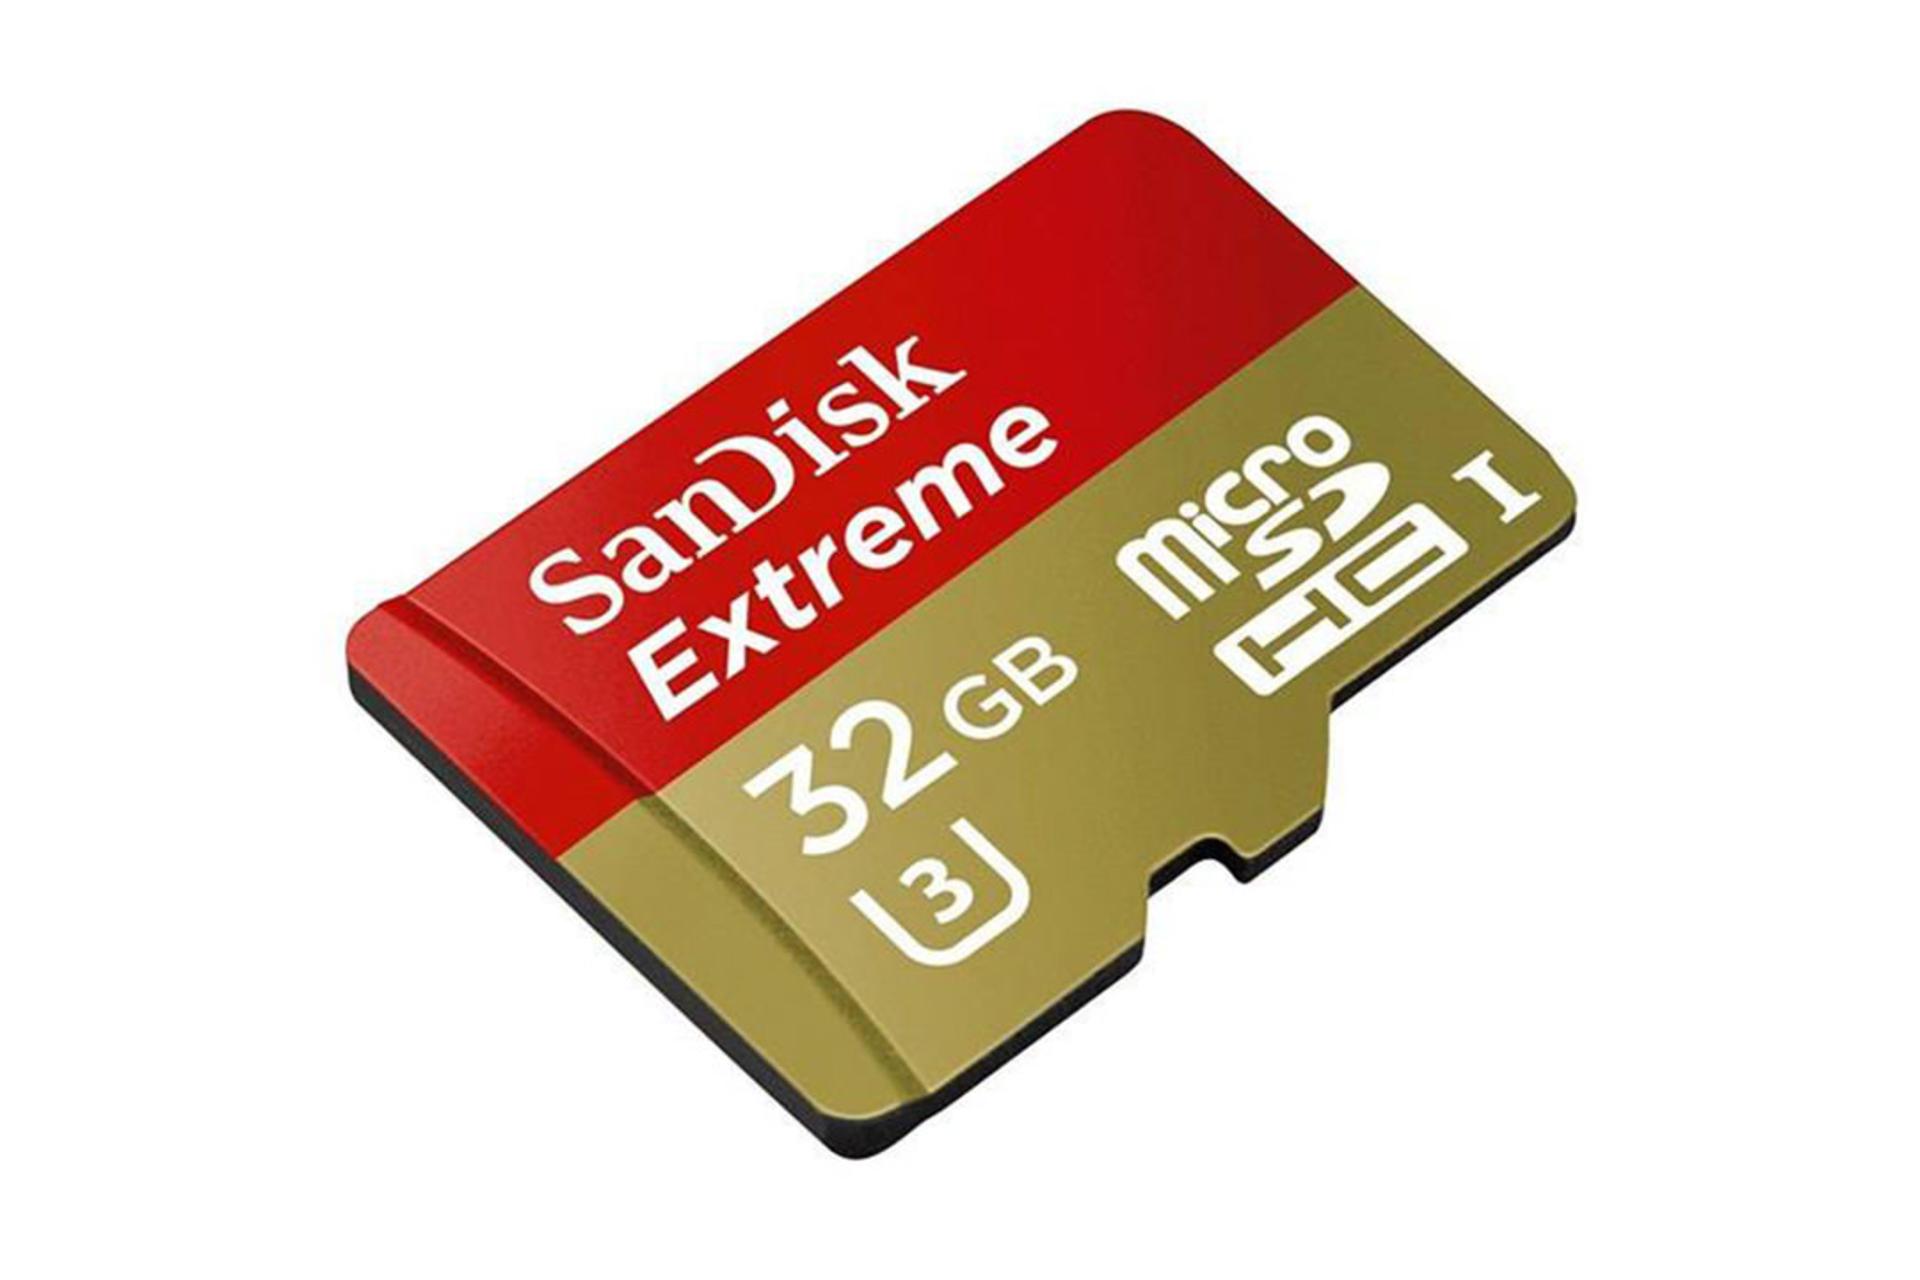 SanDisk Extreme microSDHC Class 10 UHS-I U3 32GB